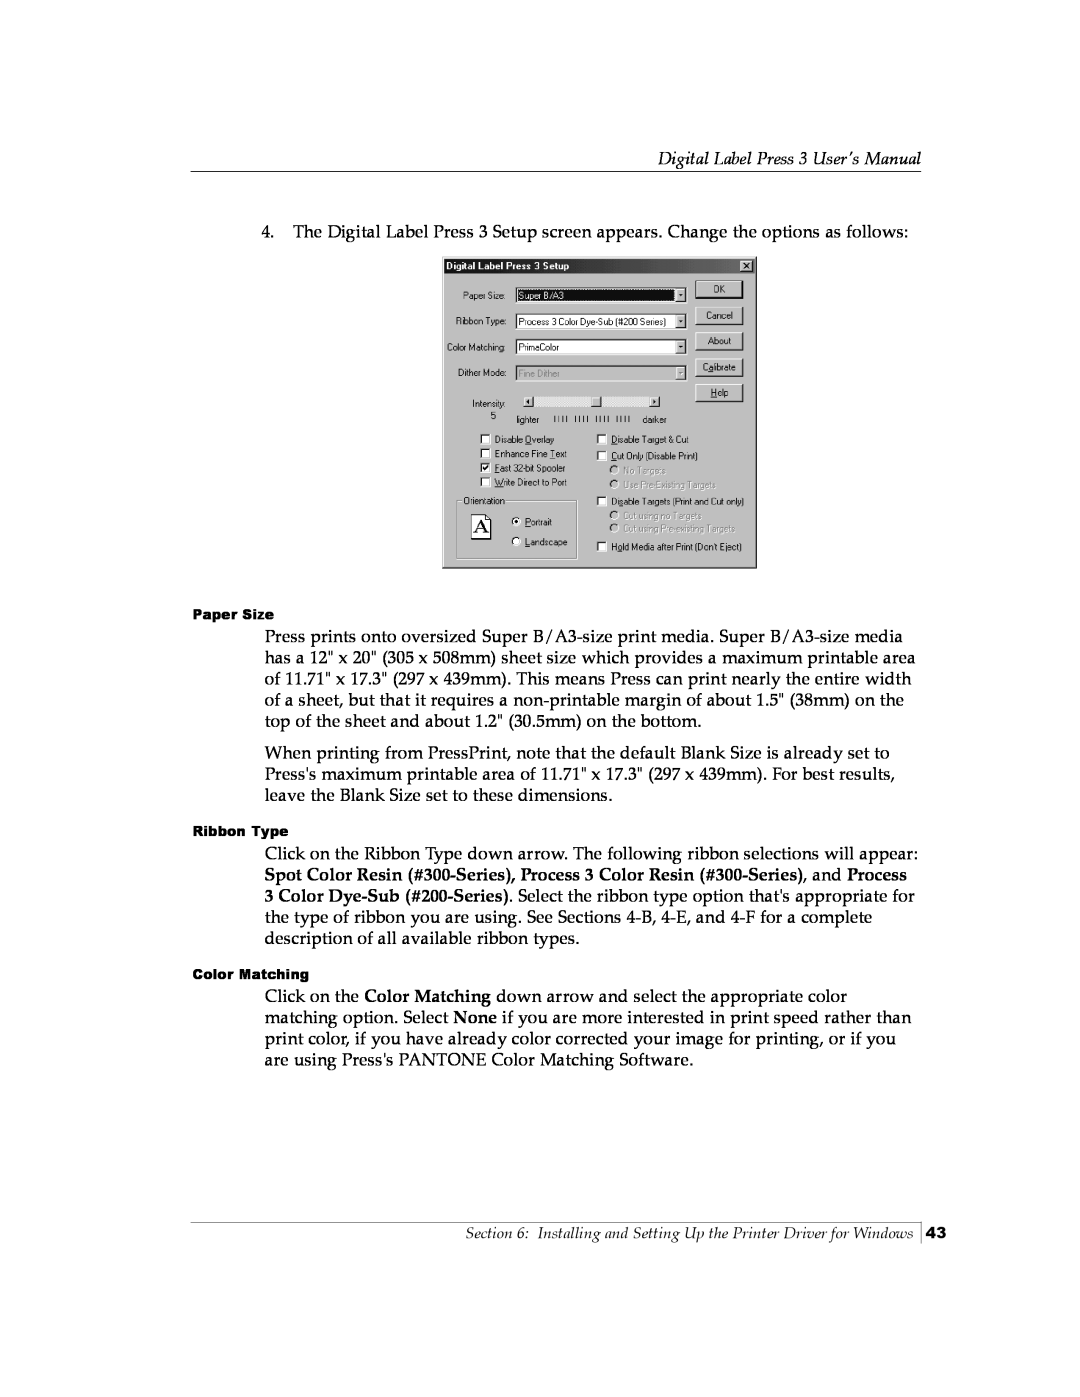 Primera Technology 510212 manual Digital Label Press 3 User’s Manual, Paper Size, Ribbon Type, Color Matching 